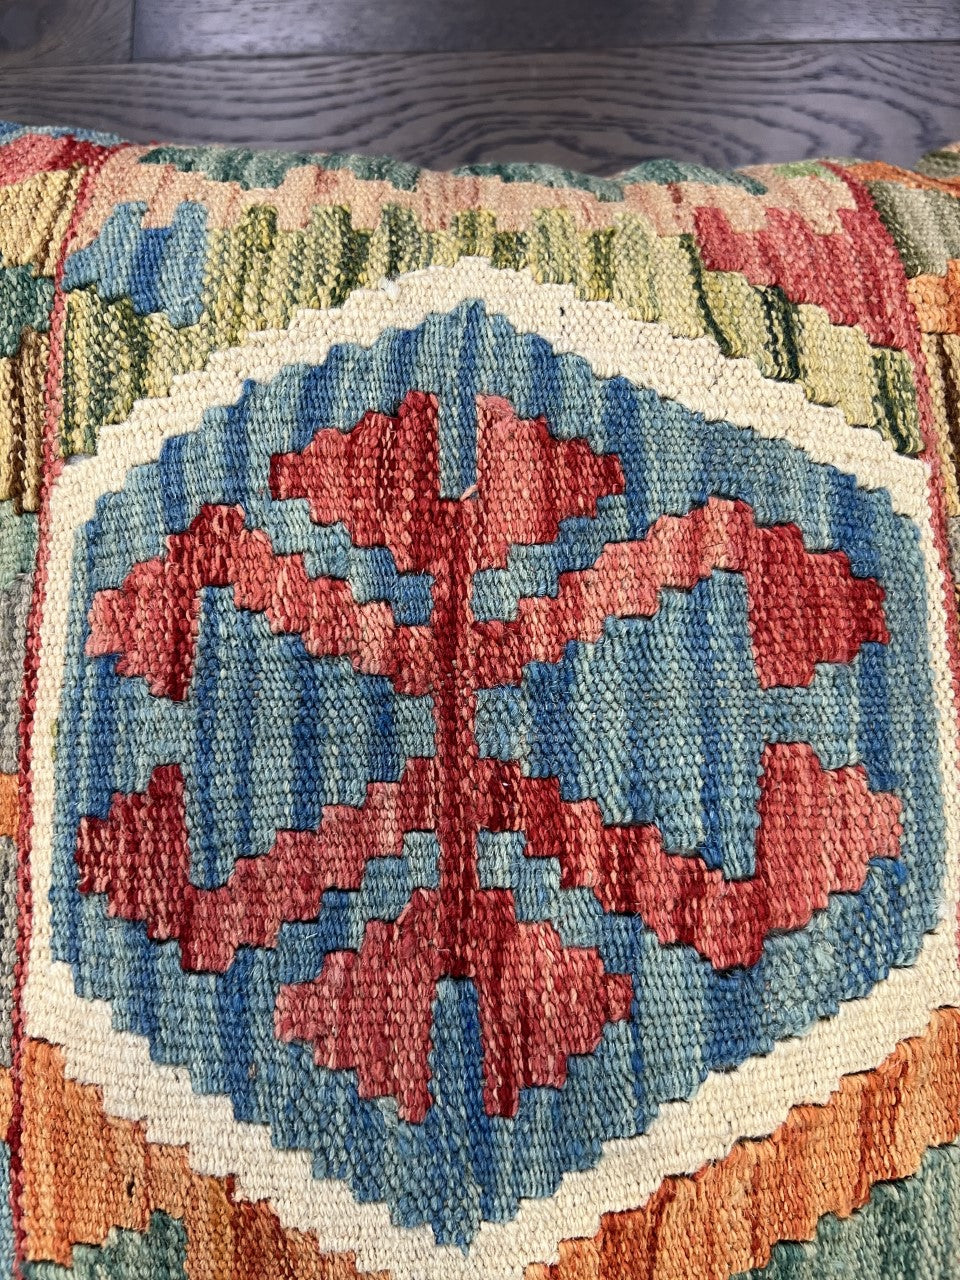 Amazing Afghan Kilim new decorative cushion - Hakiemie Rug Gallery